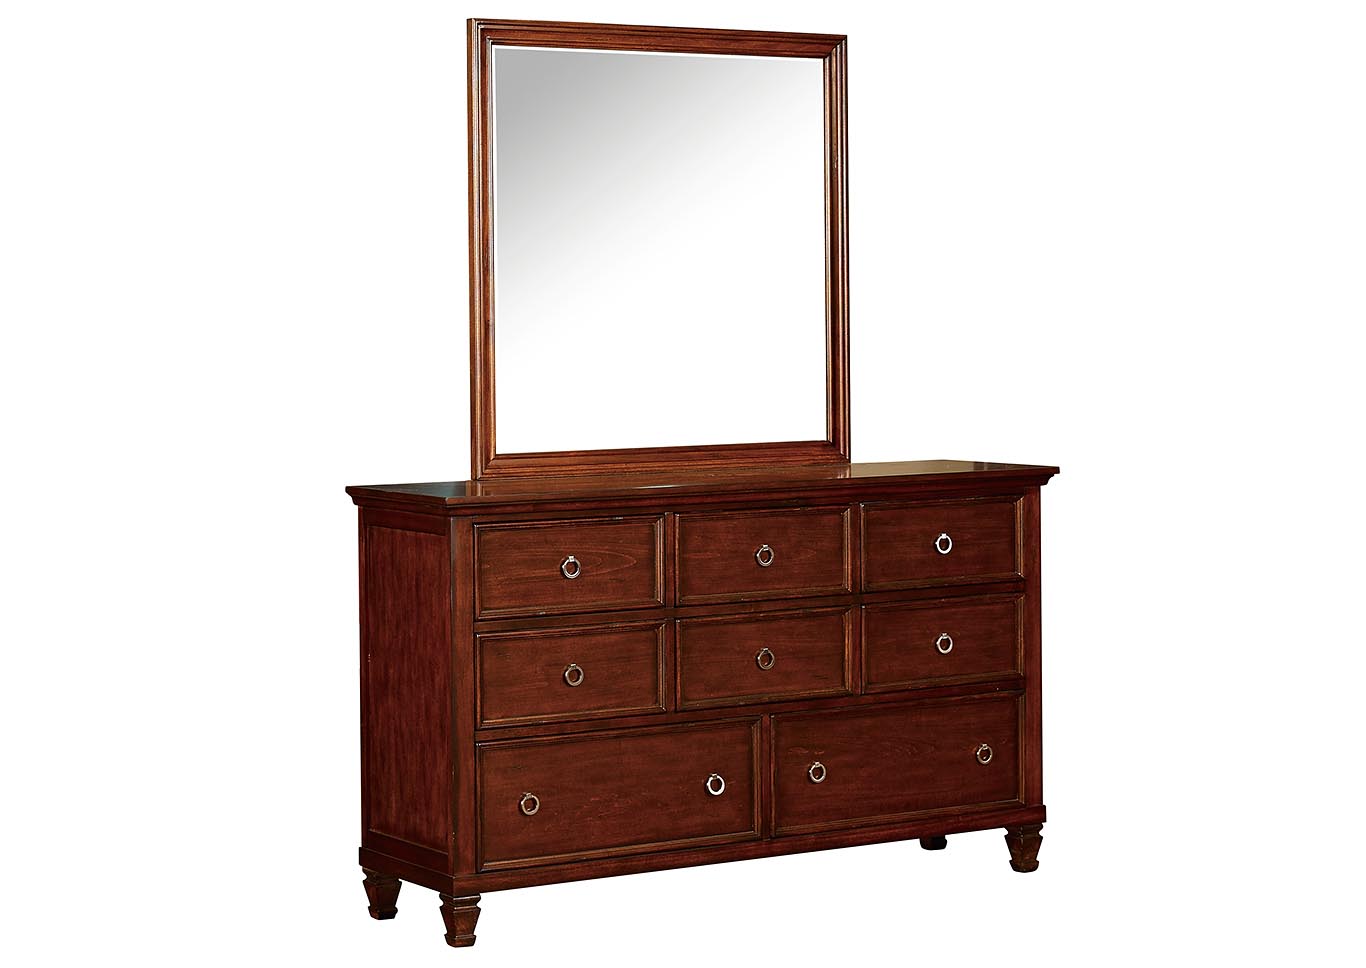 Tamarack Brown Cherry Full Bed w/Dresser and Mirror,New Classic